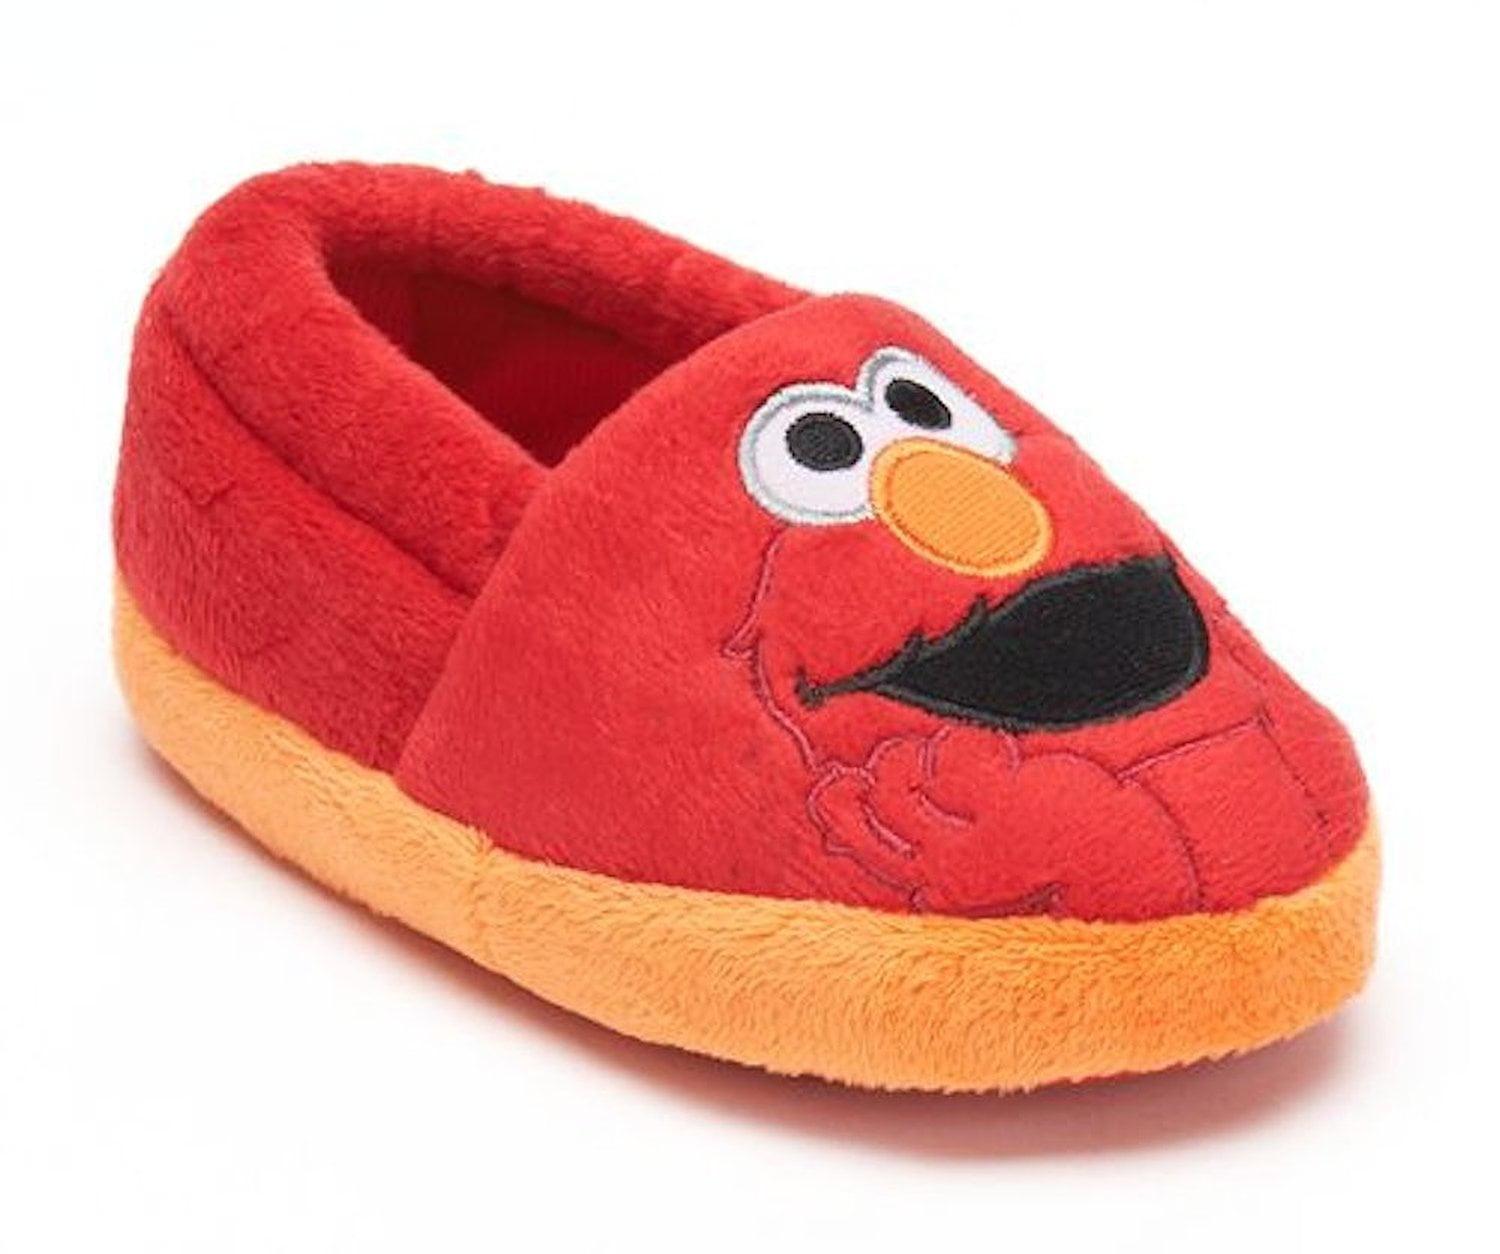 elmo slippers walmart